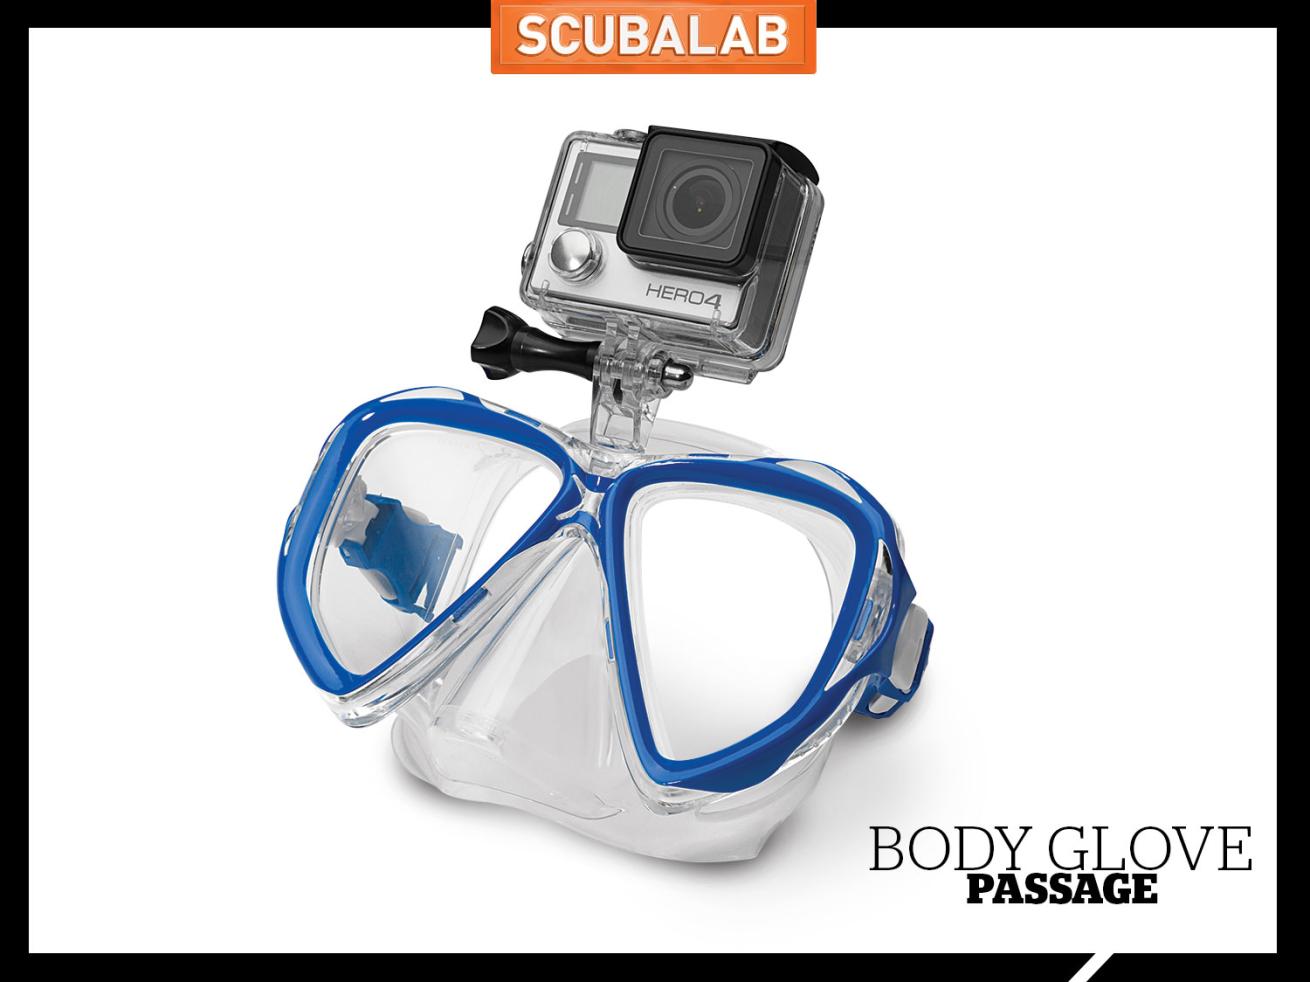 http://www.scubadiving.com/sites/default/files/styles/655_4x3/public/scuba/images/2016/02/scubadiving-masks-body-glove-passage-gopro.jpg?itok=BnRIt6rd